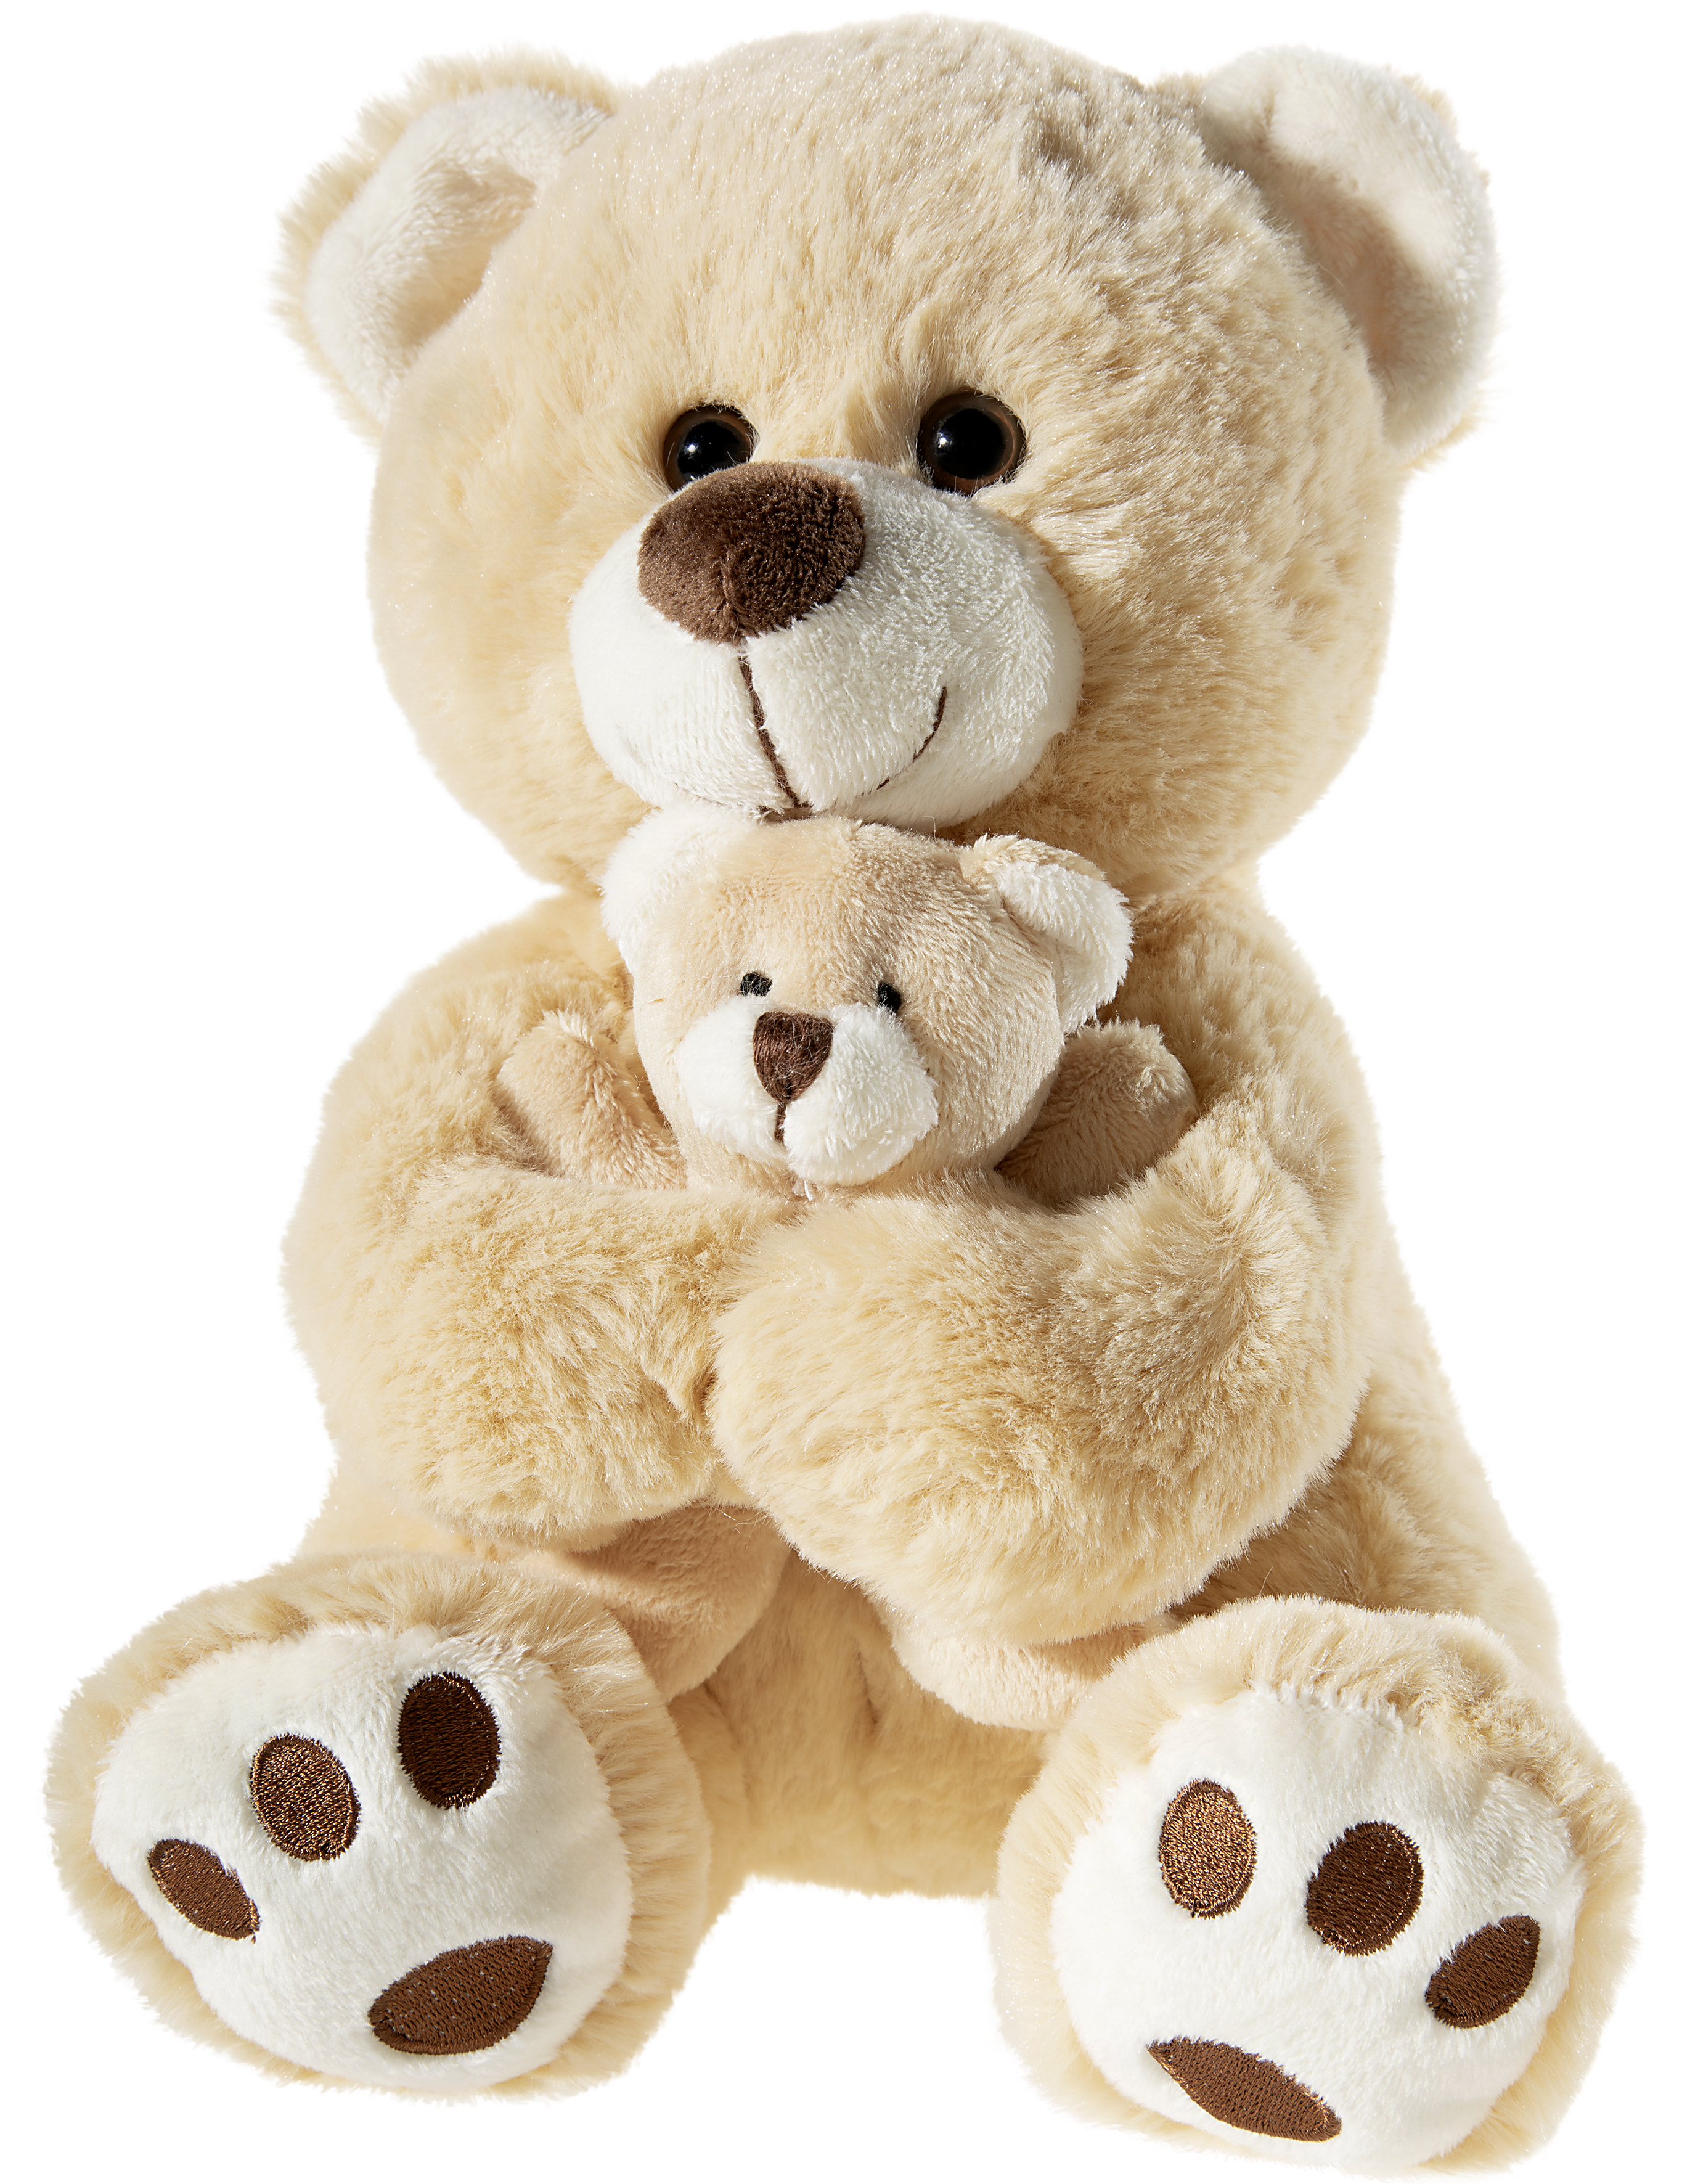 Misanimo Bär mit Baby in beige / hellbraun Teddy 25cm